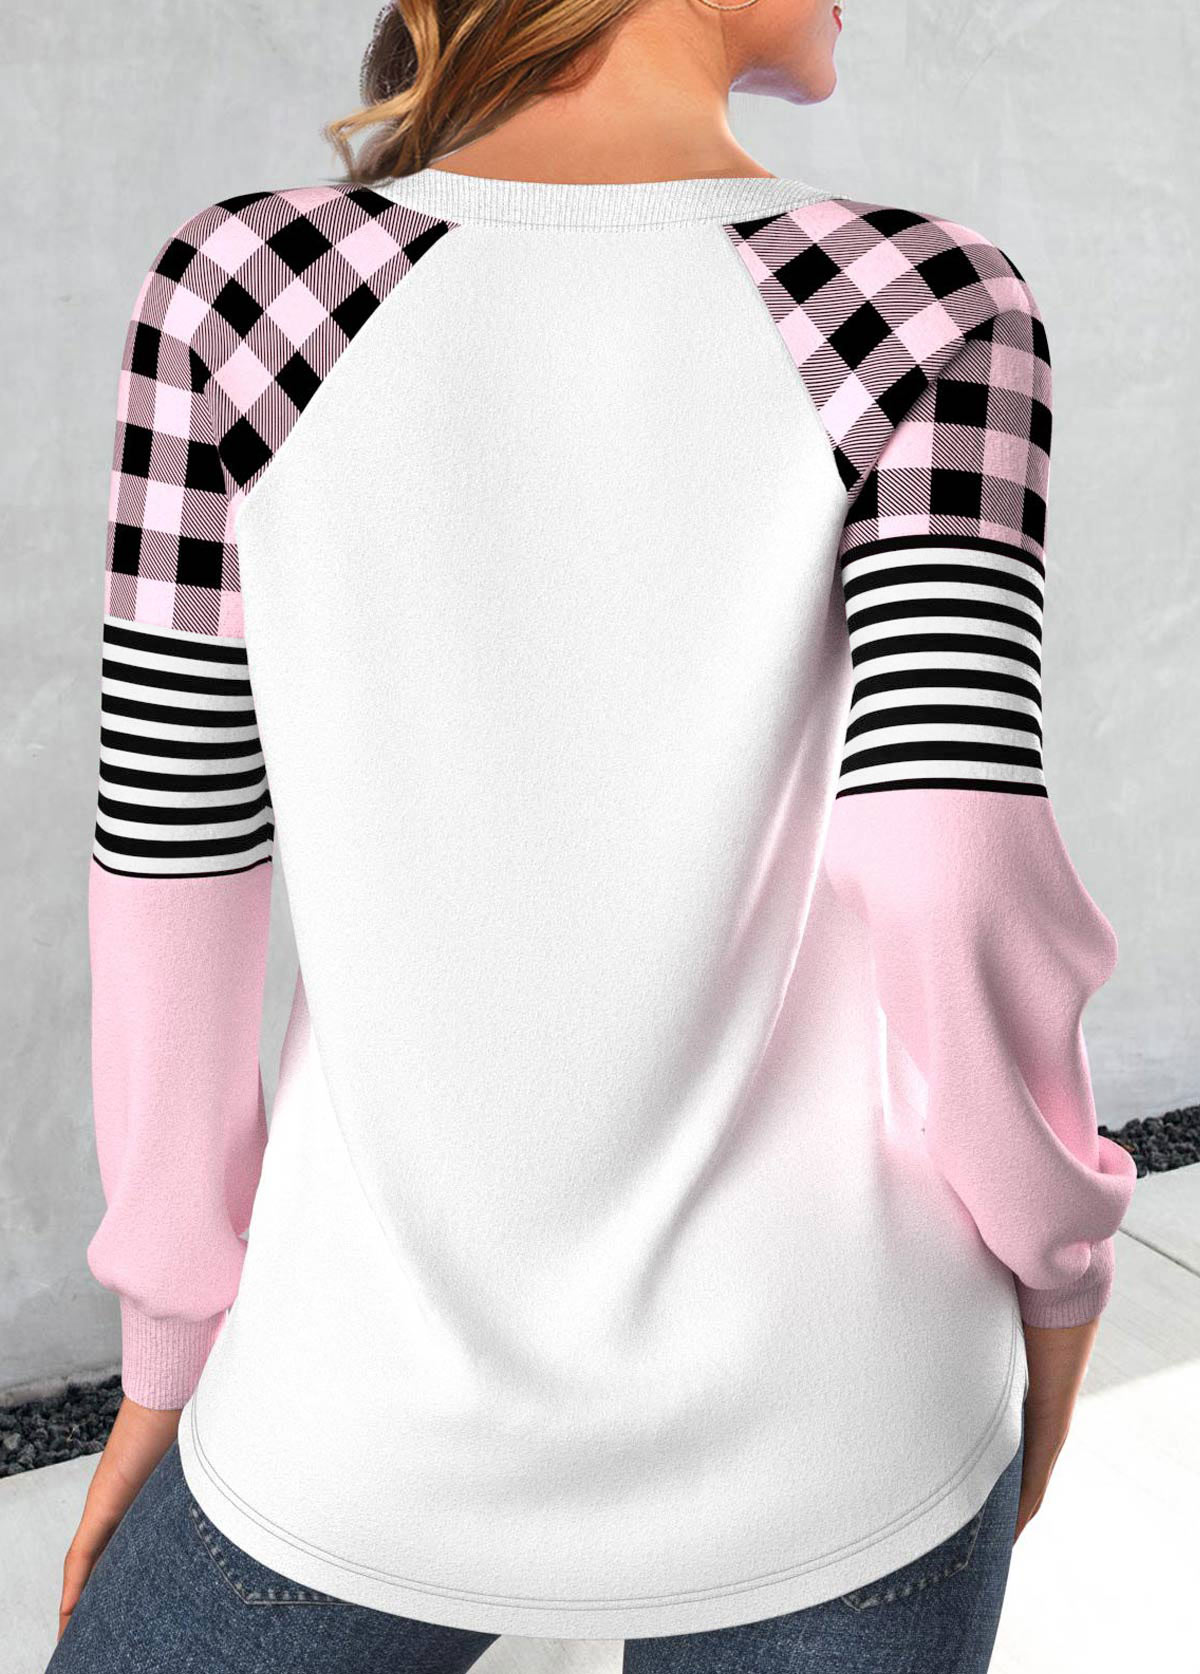 Light Pink Christmas Snowman Print Long Sleeve Sweatshirt